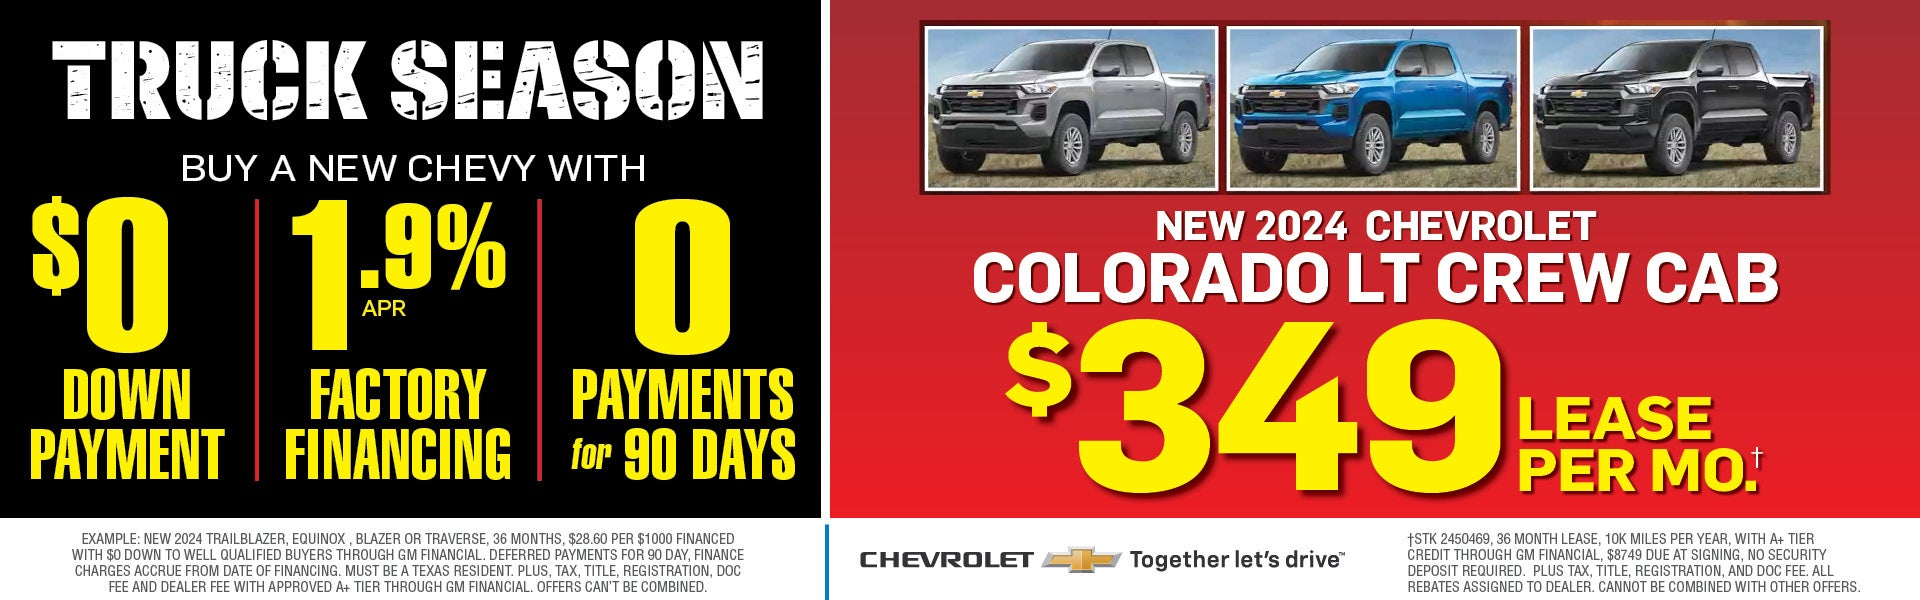 $349 lease per month Chevrolet Colorado Crew Cab 